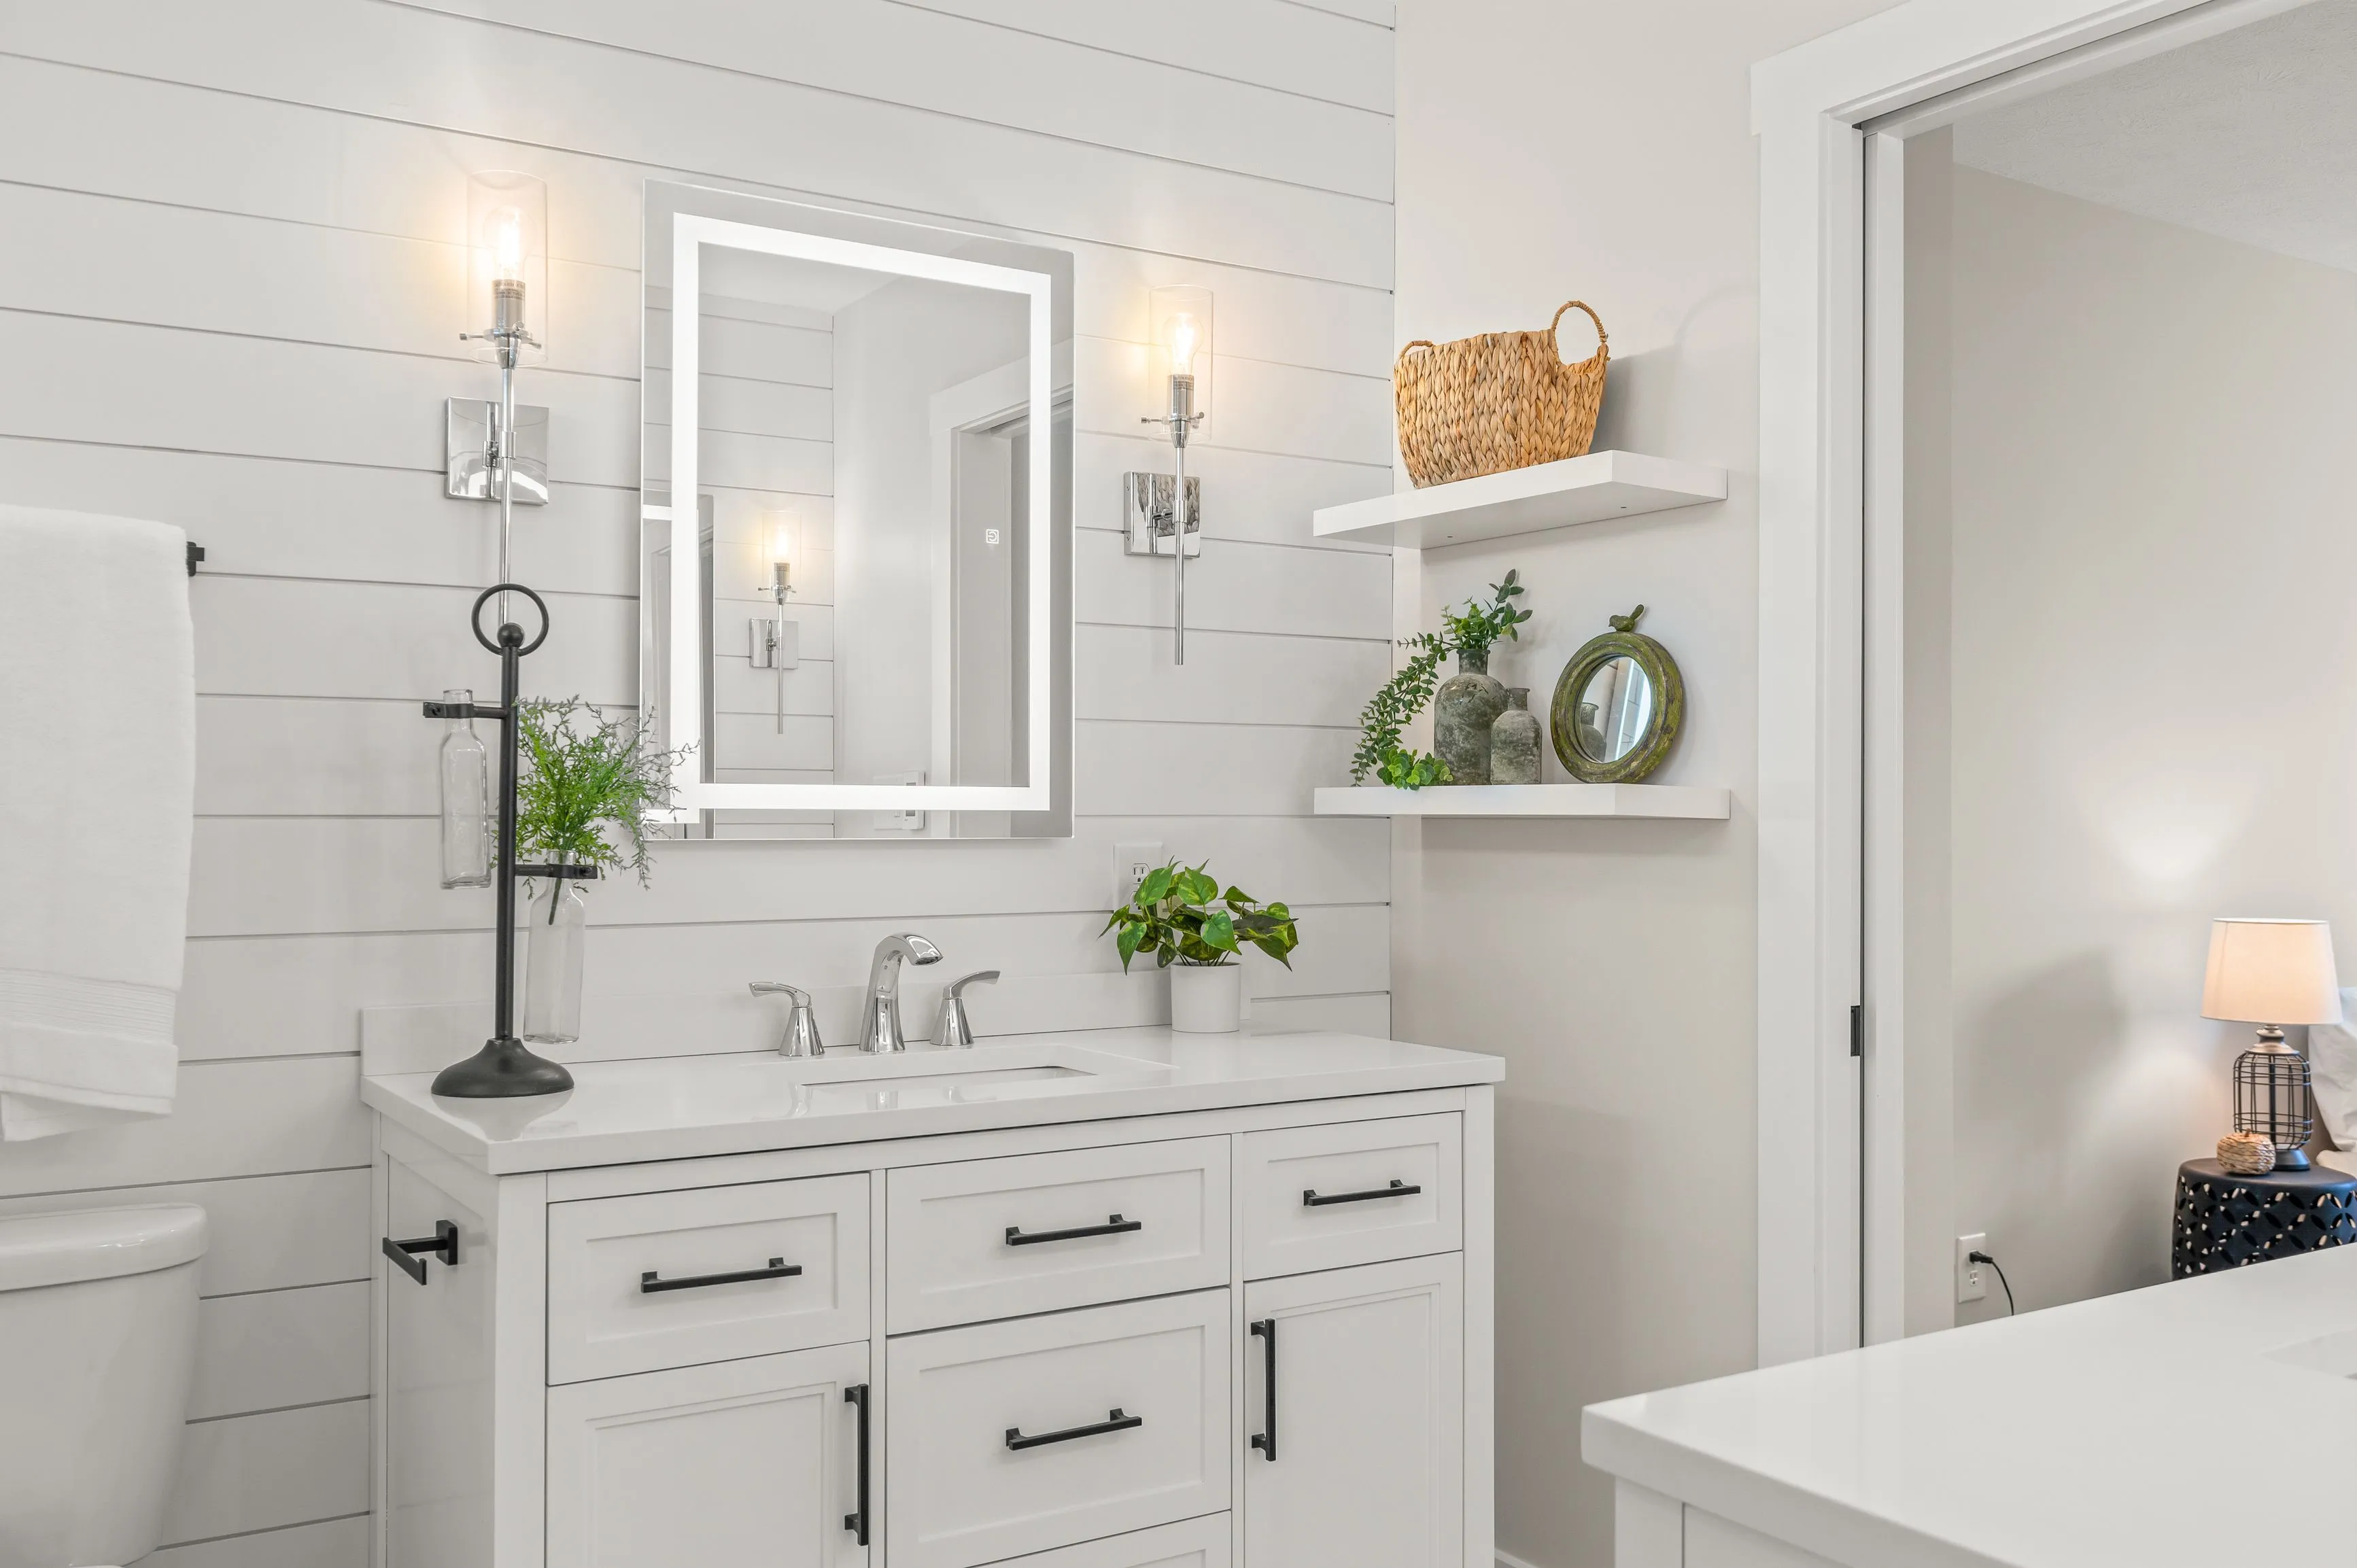 Bright modern bathroom interior with white vanity, mirror, and decorative plants.